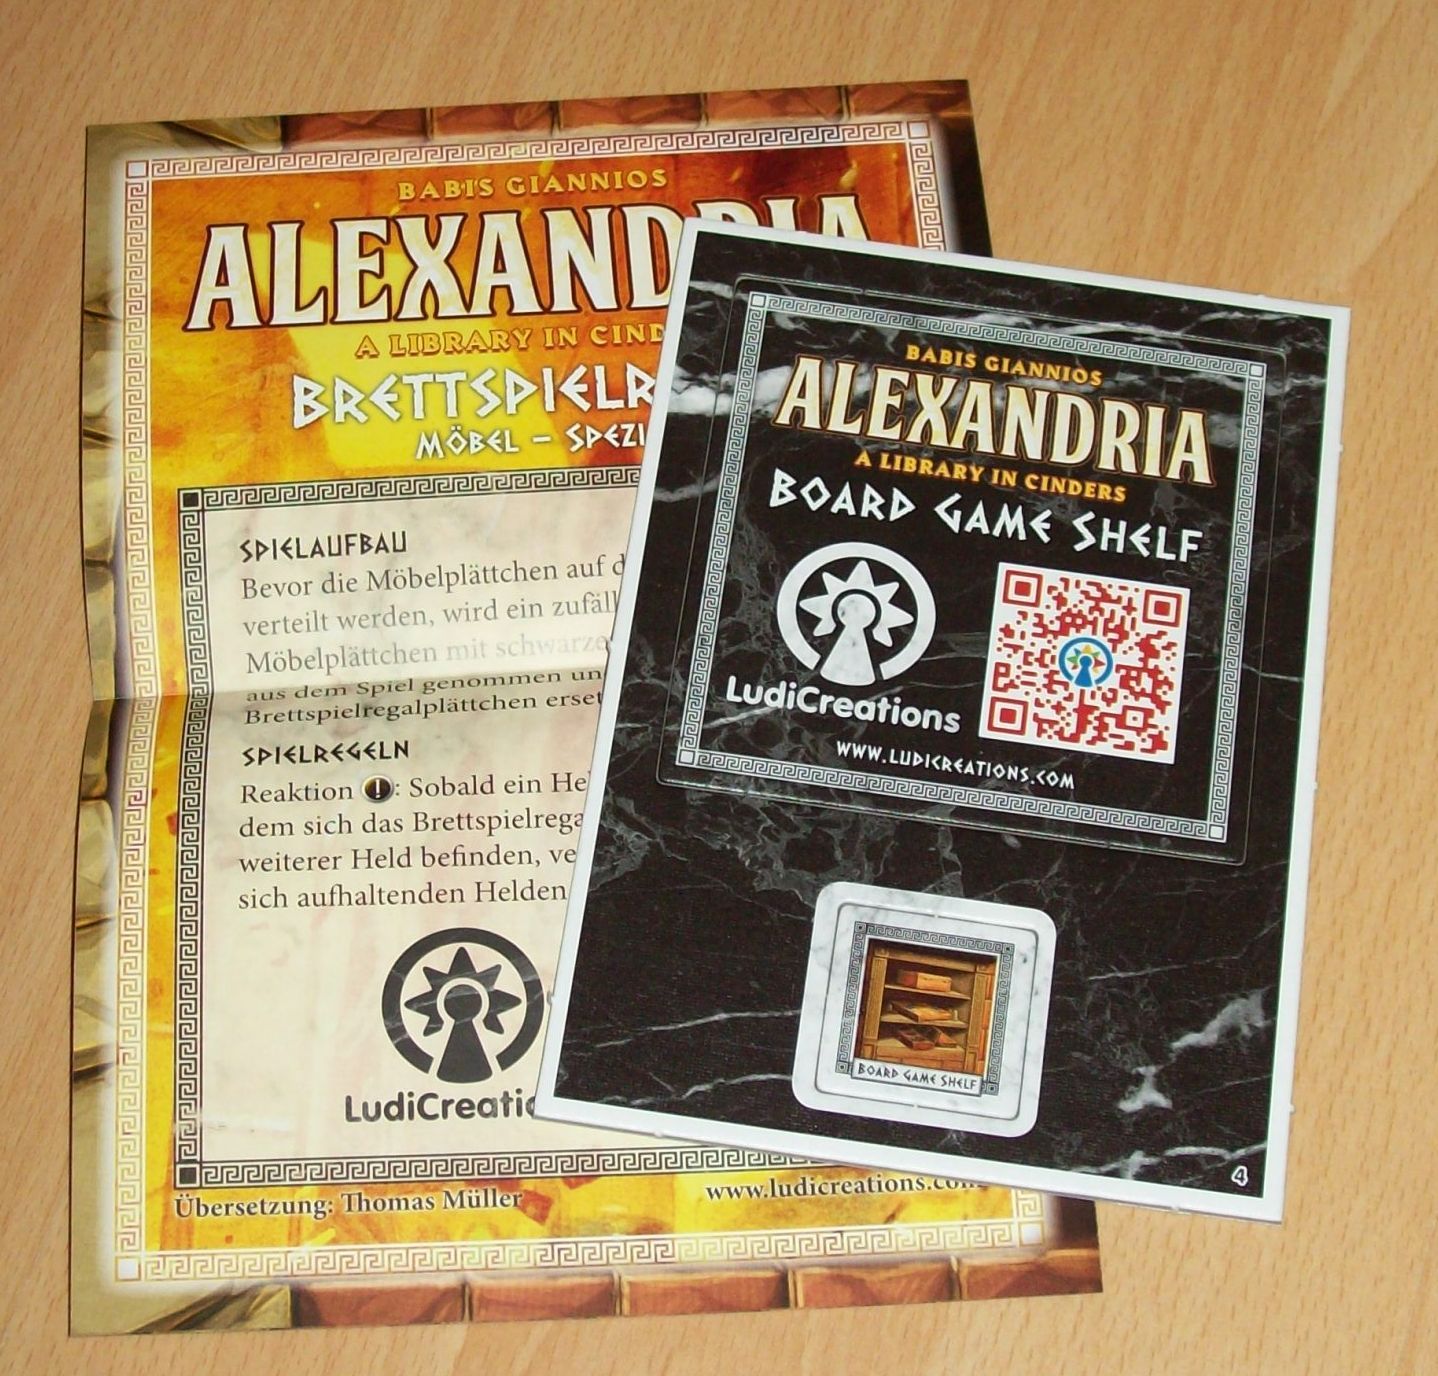 Alexandria: Board Game Shelf Promo